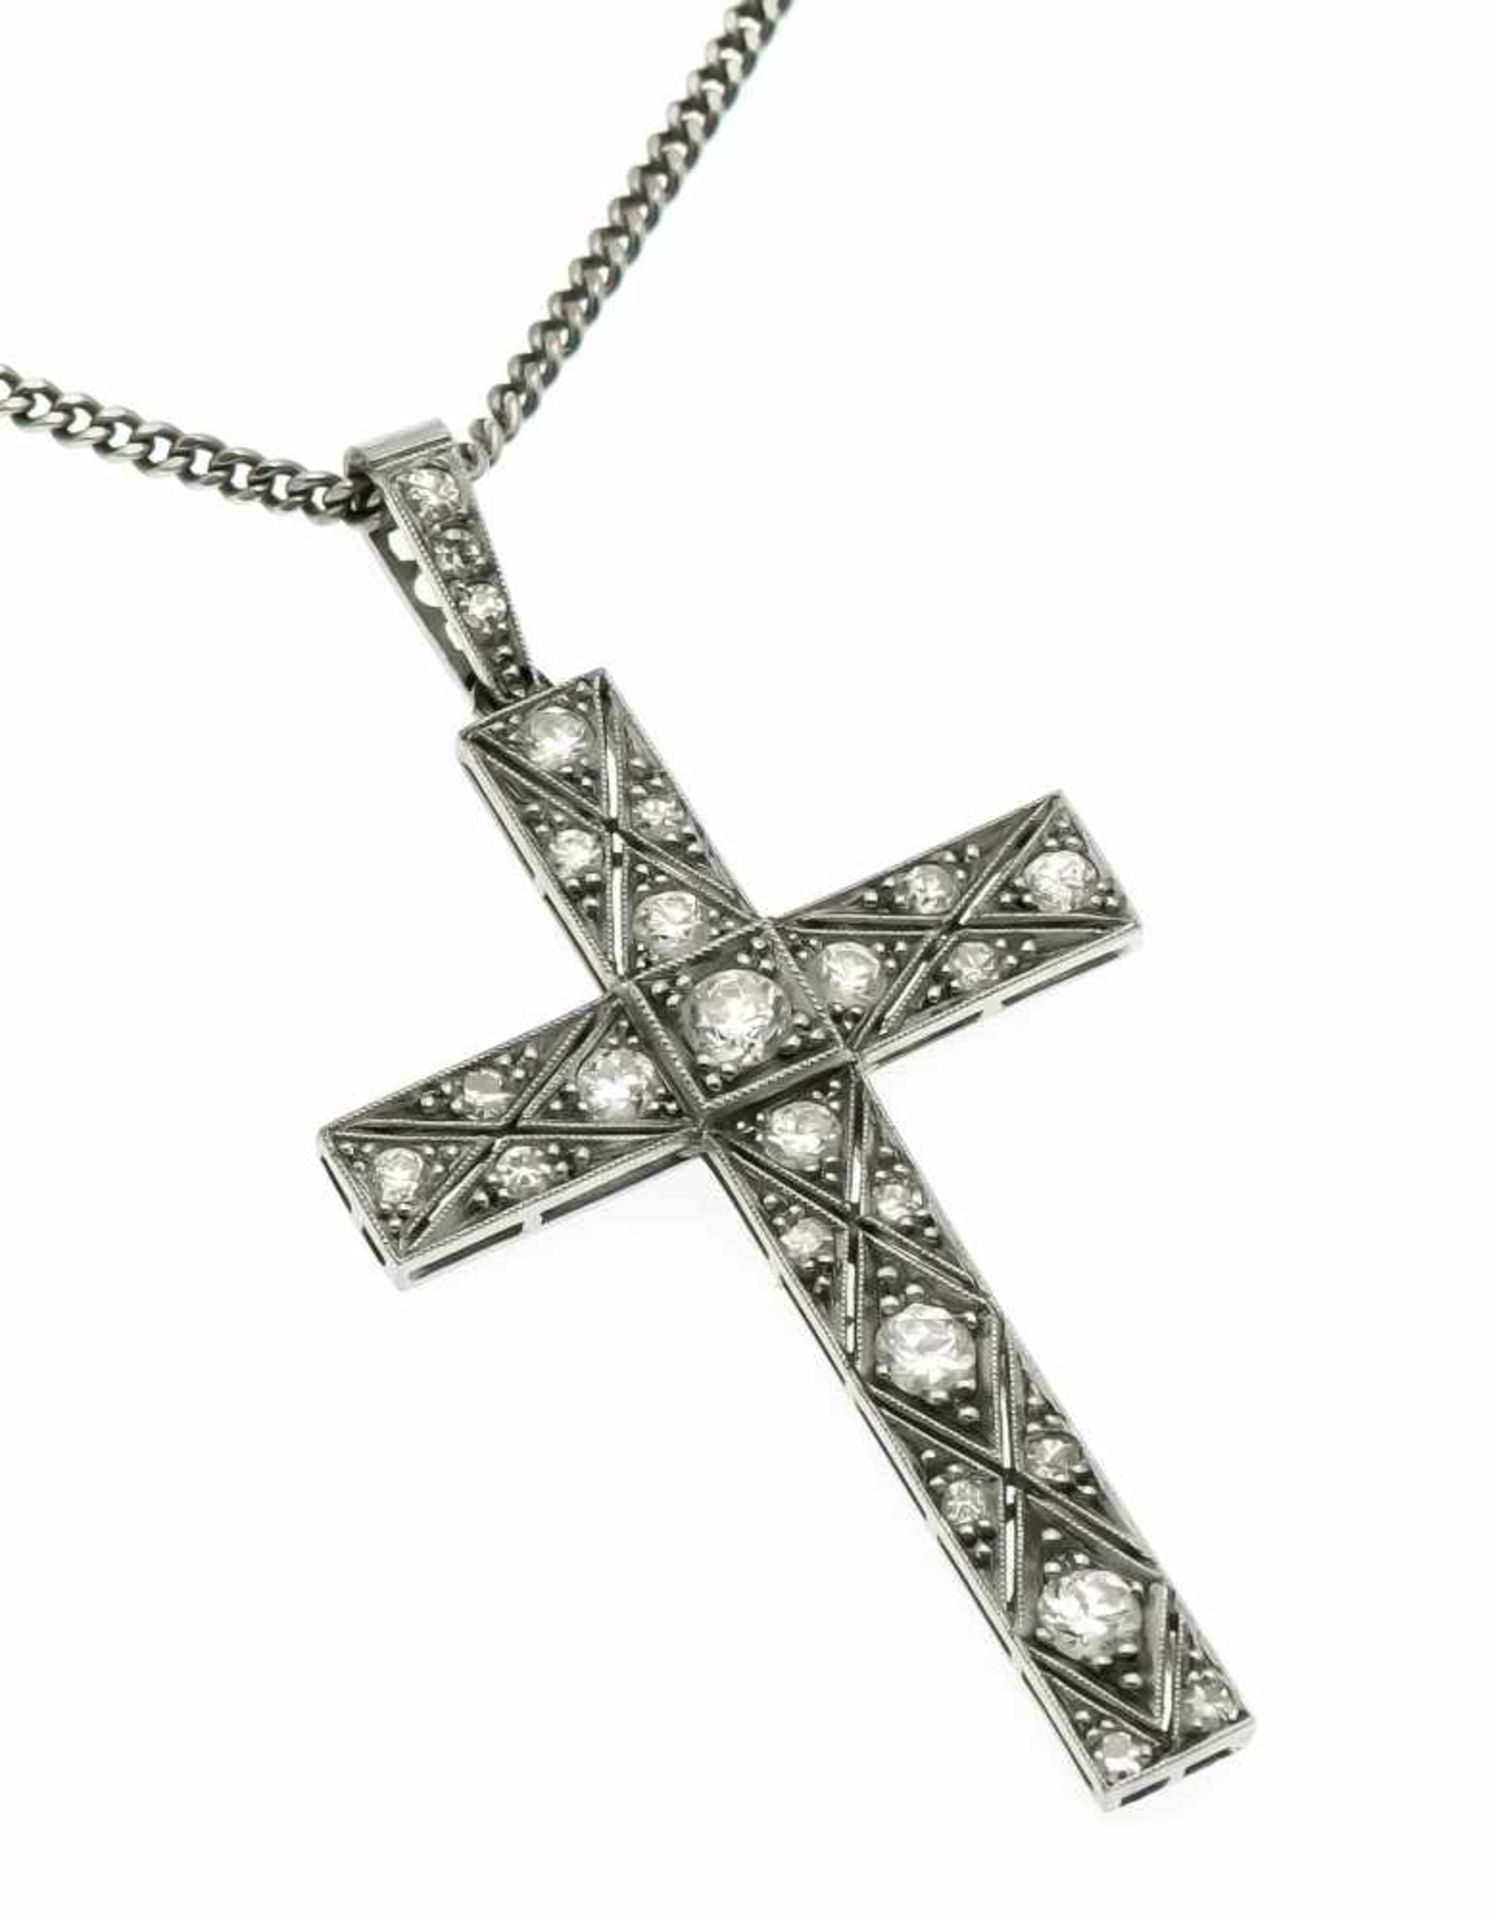 Old cut diamond cross pendant platinum 800/000 with old cut diamond, total weight 0.68 ct